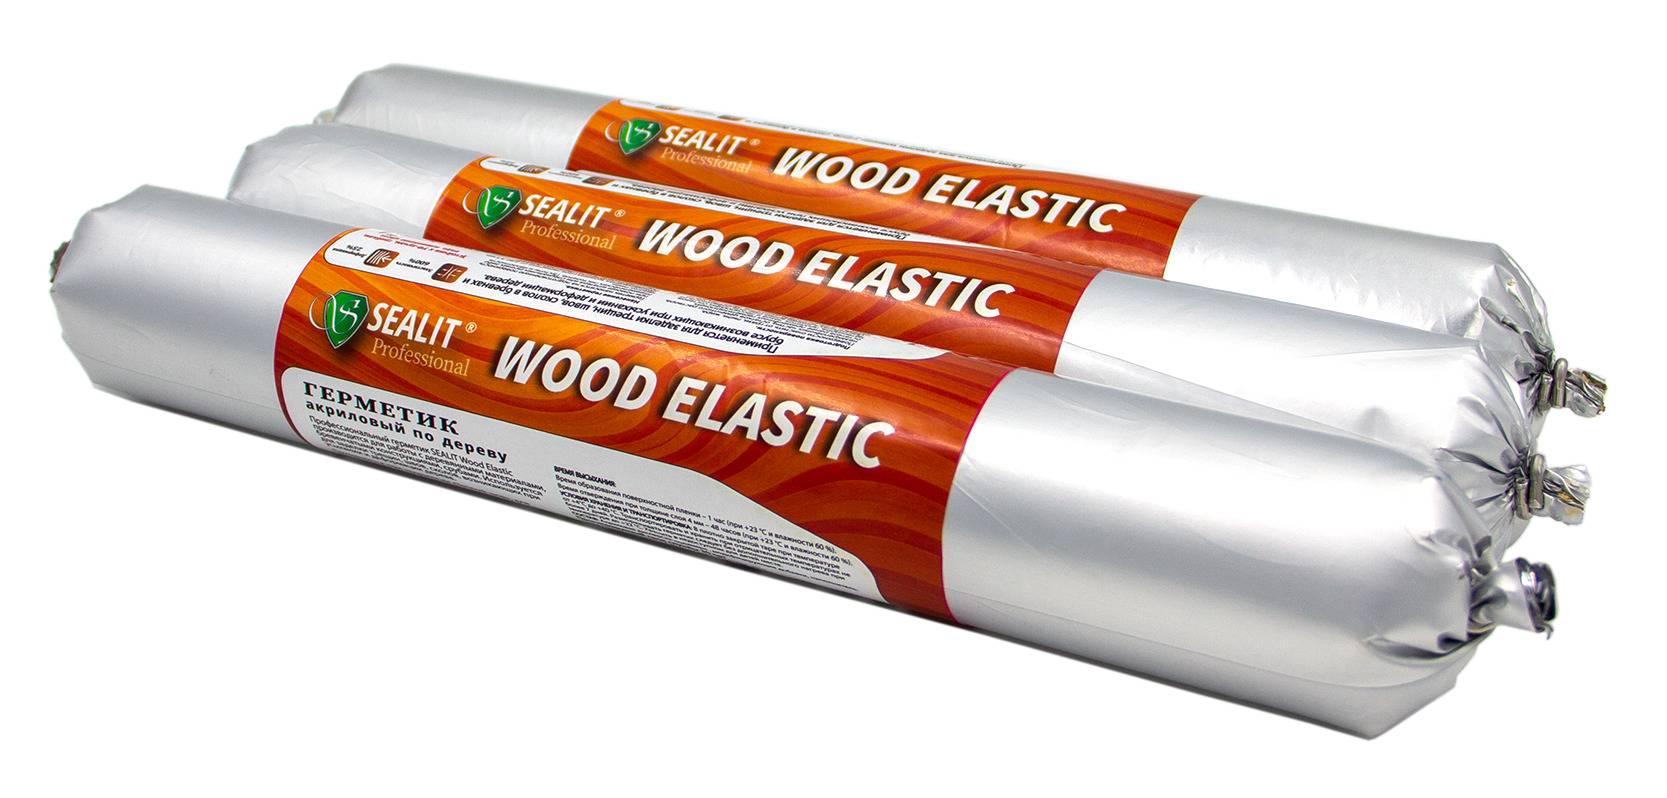 Герметик для дерева акриловый Sealit Wood Elastic, 900 гр, Бук герметик irfix для паркета акриловый темная вишня 310 мл